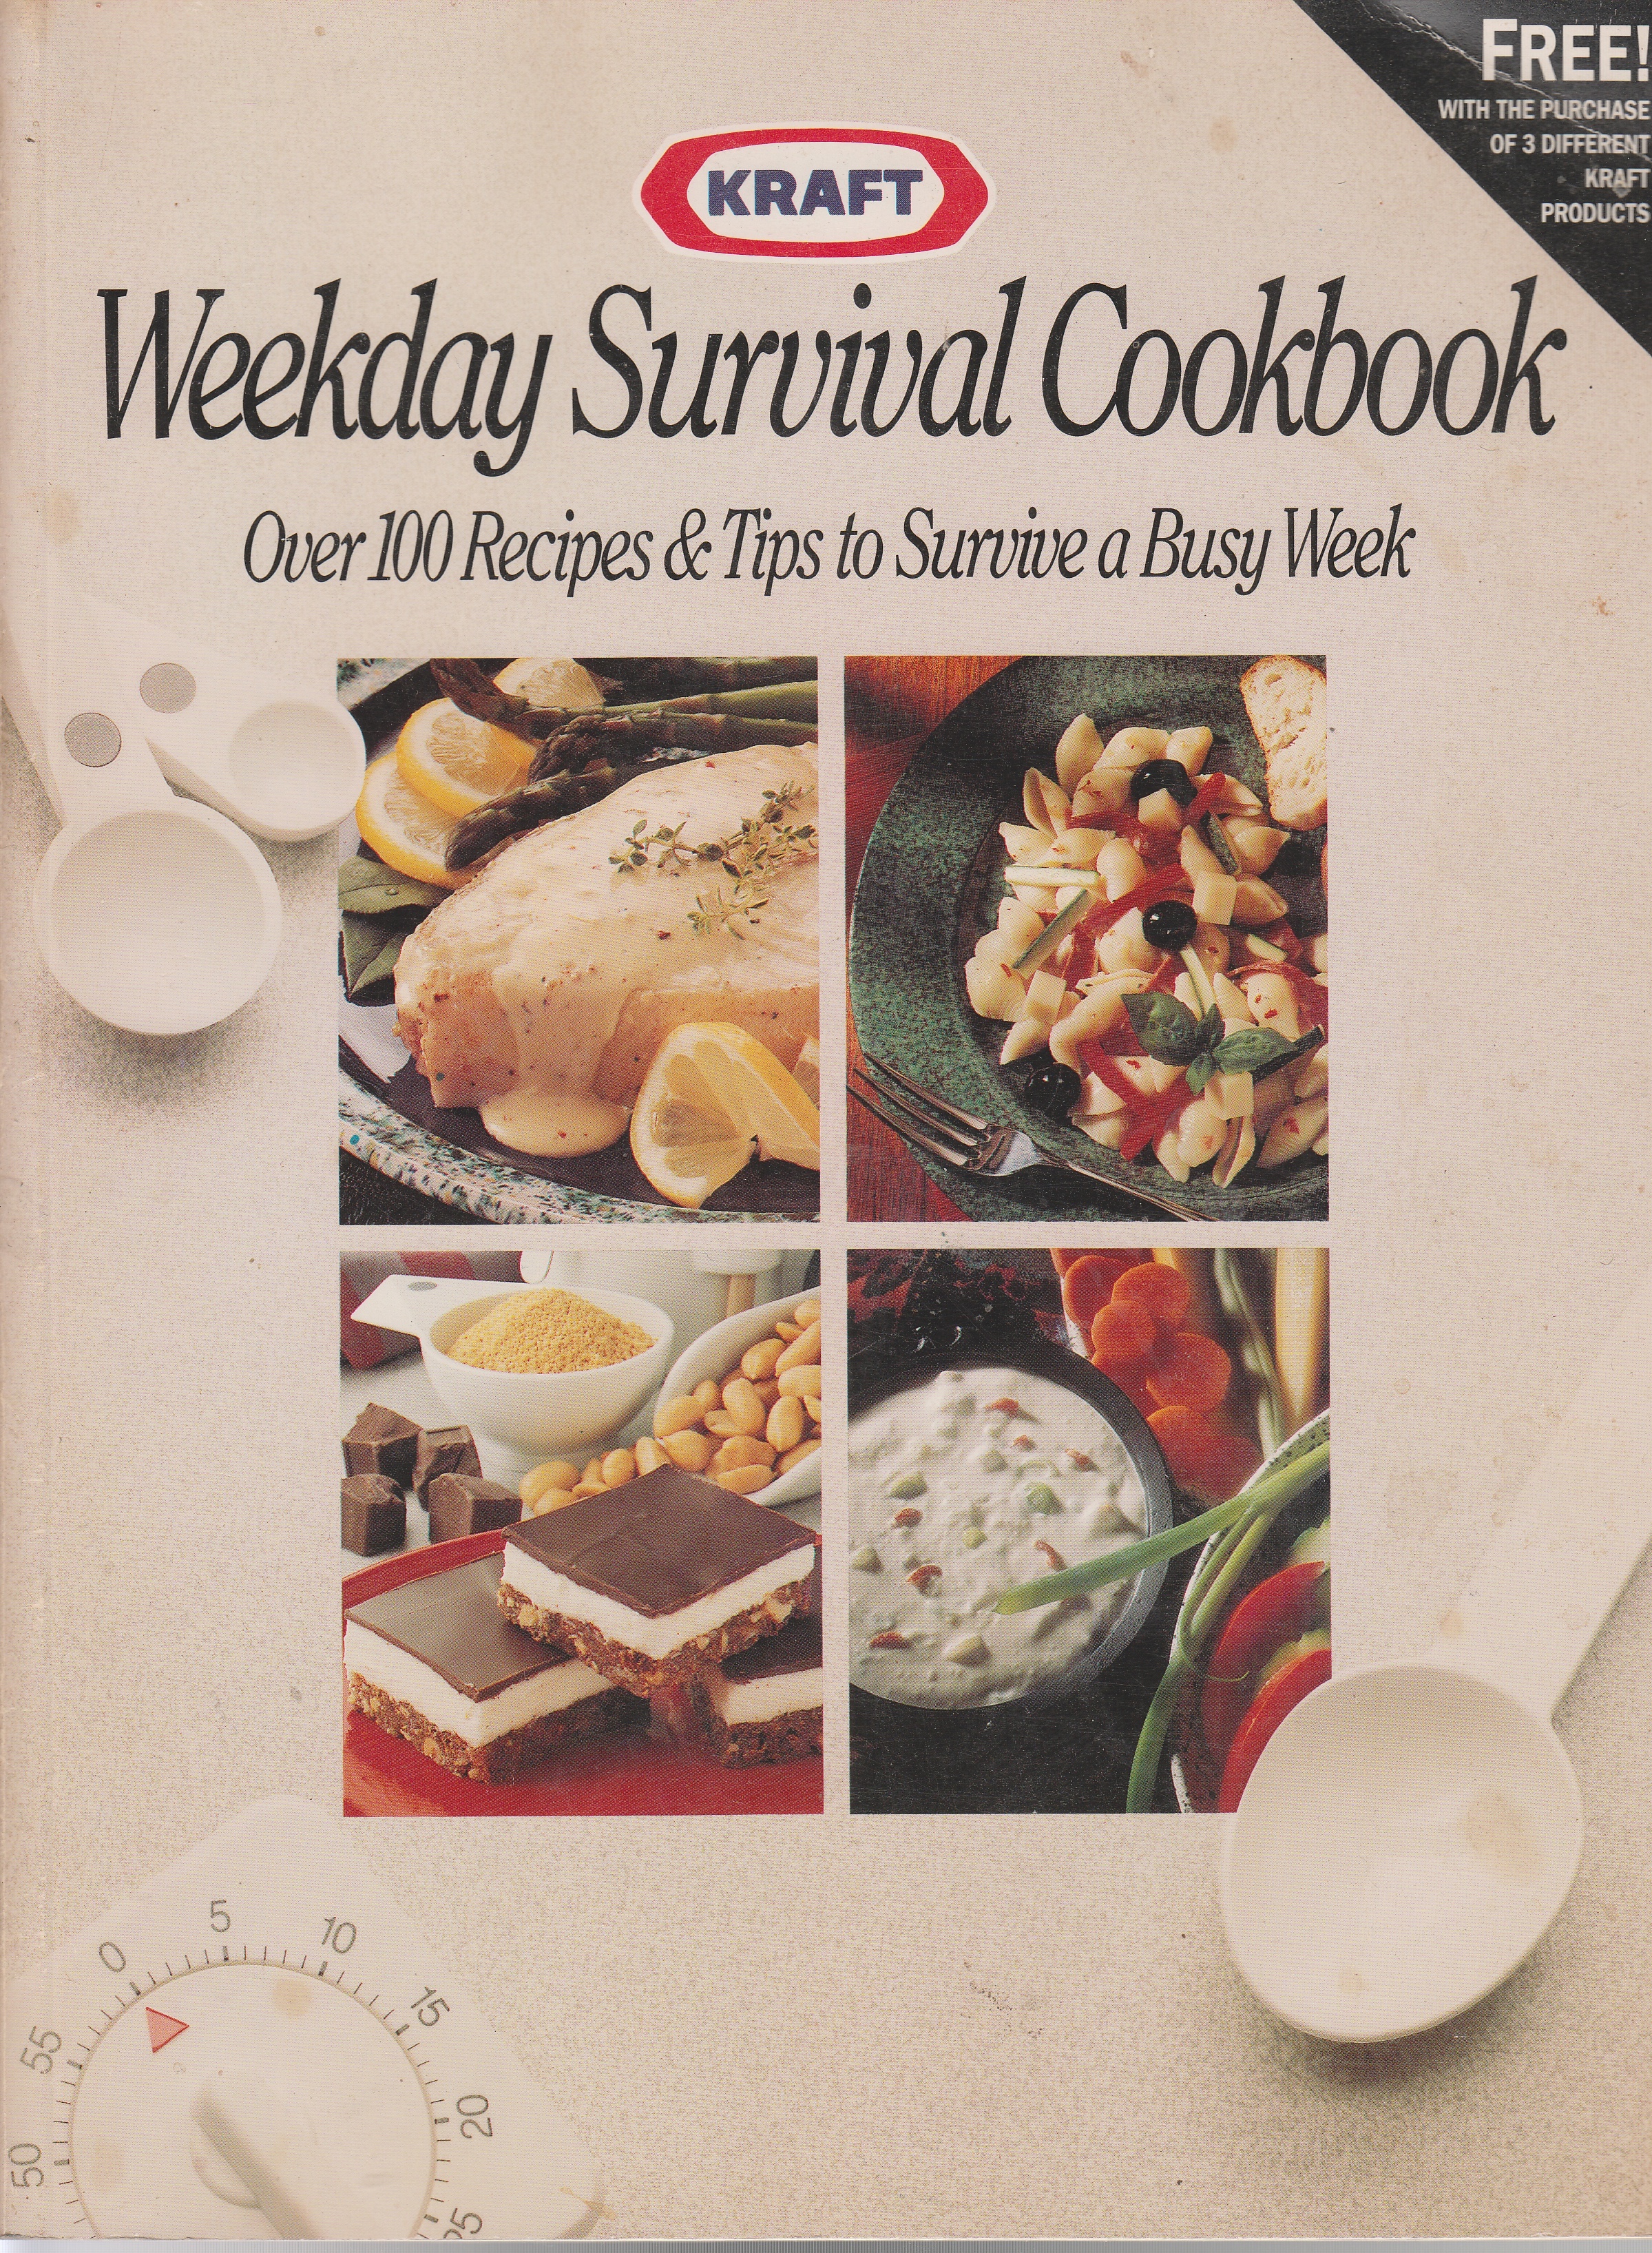 Image for Kraft Weekday Survival Cookbook